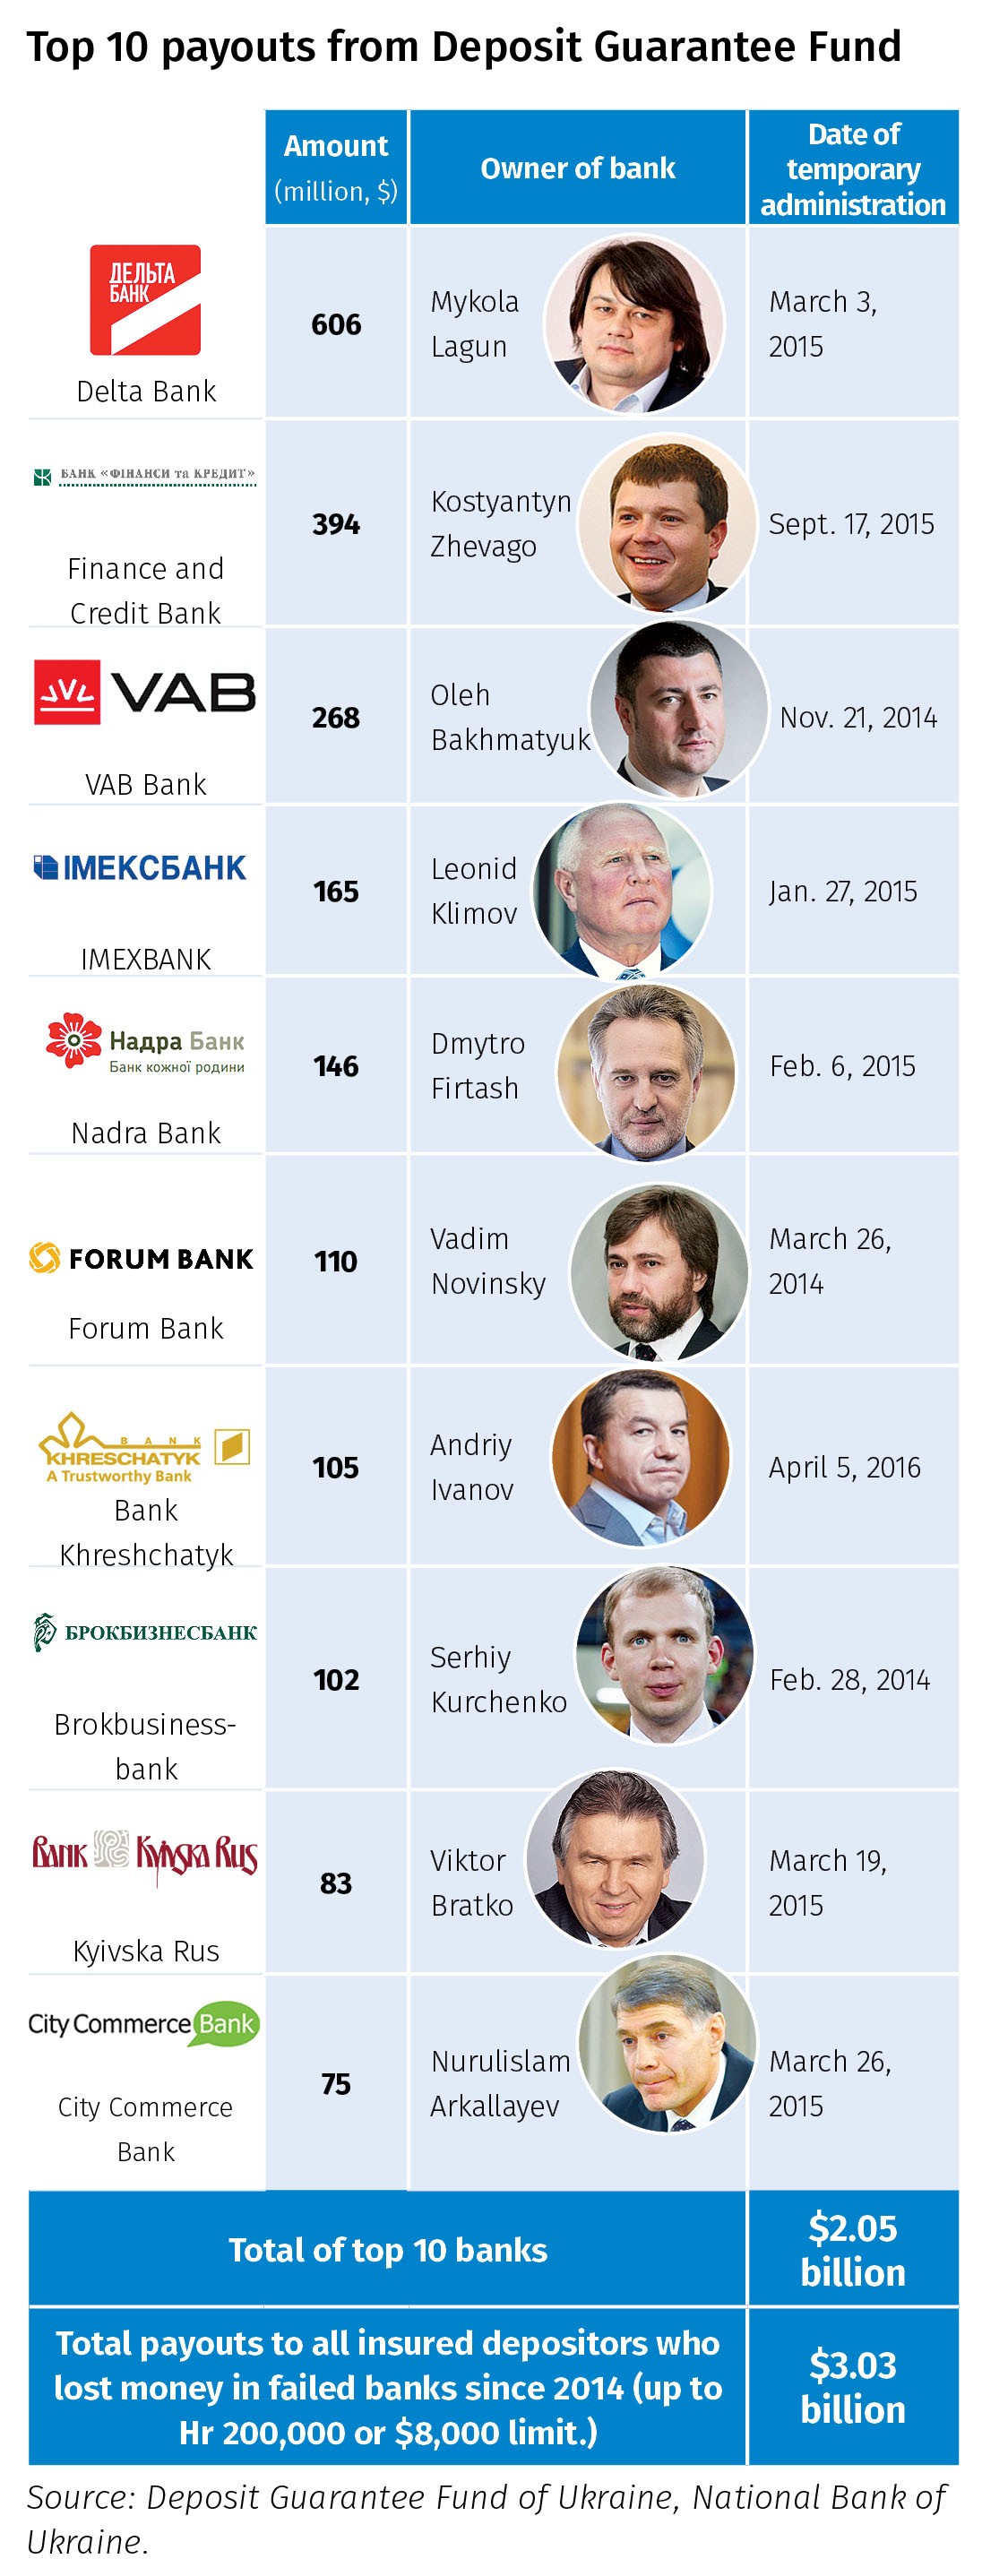 Source: Deposit Guarantee Fund of Ukraine, National Bank of Ukraine.